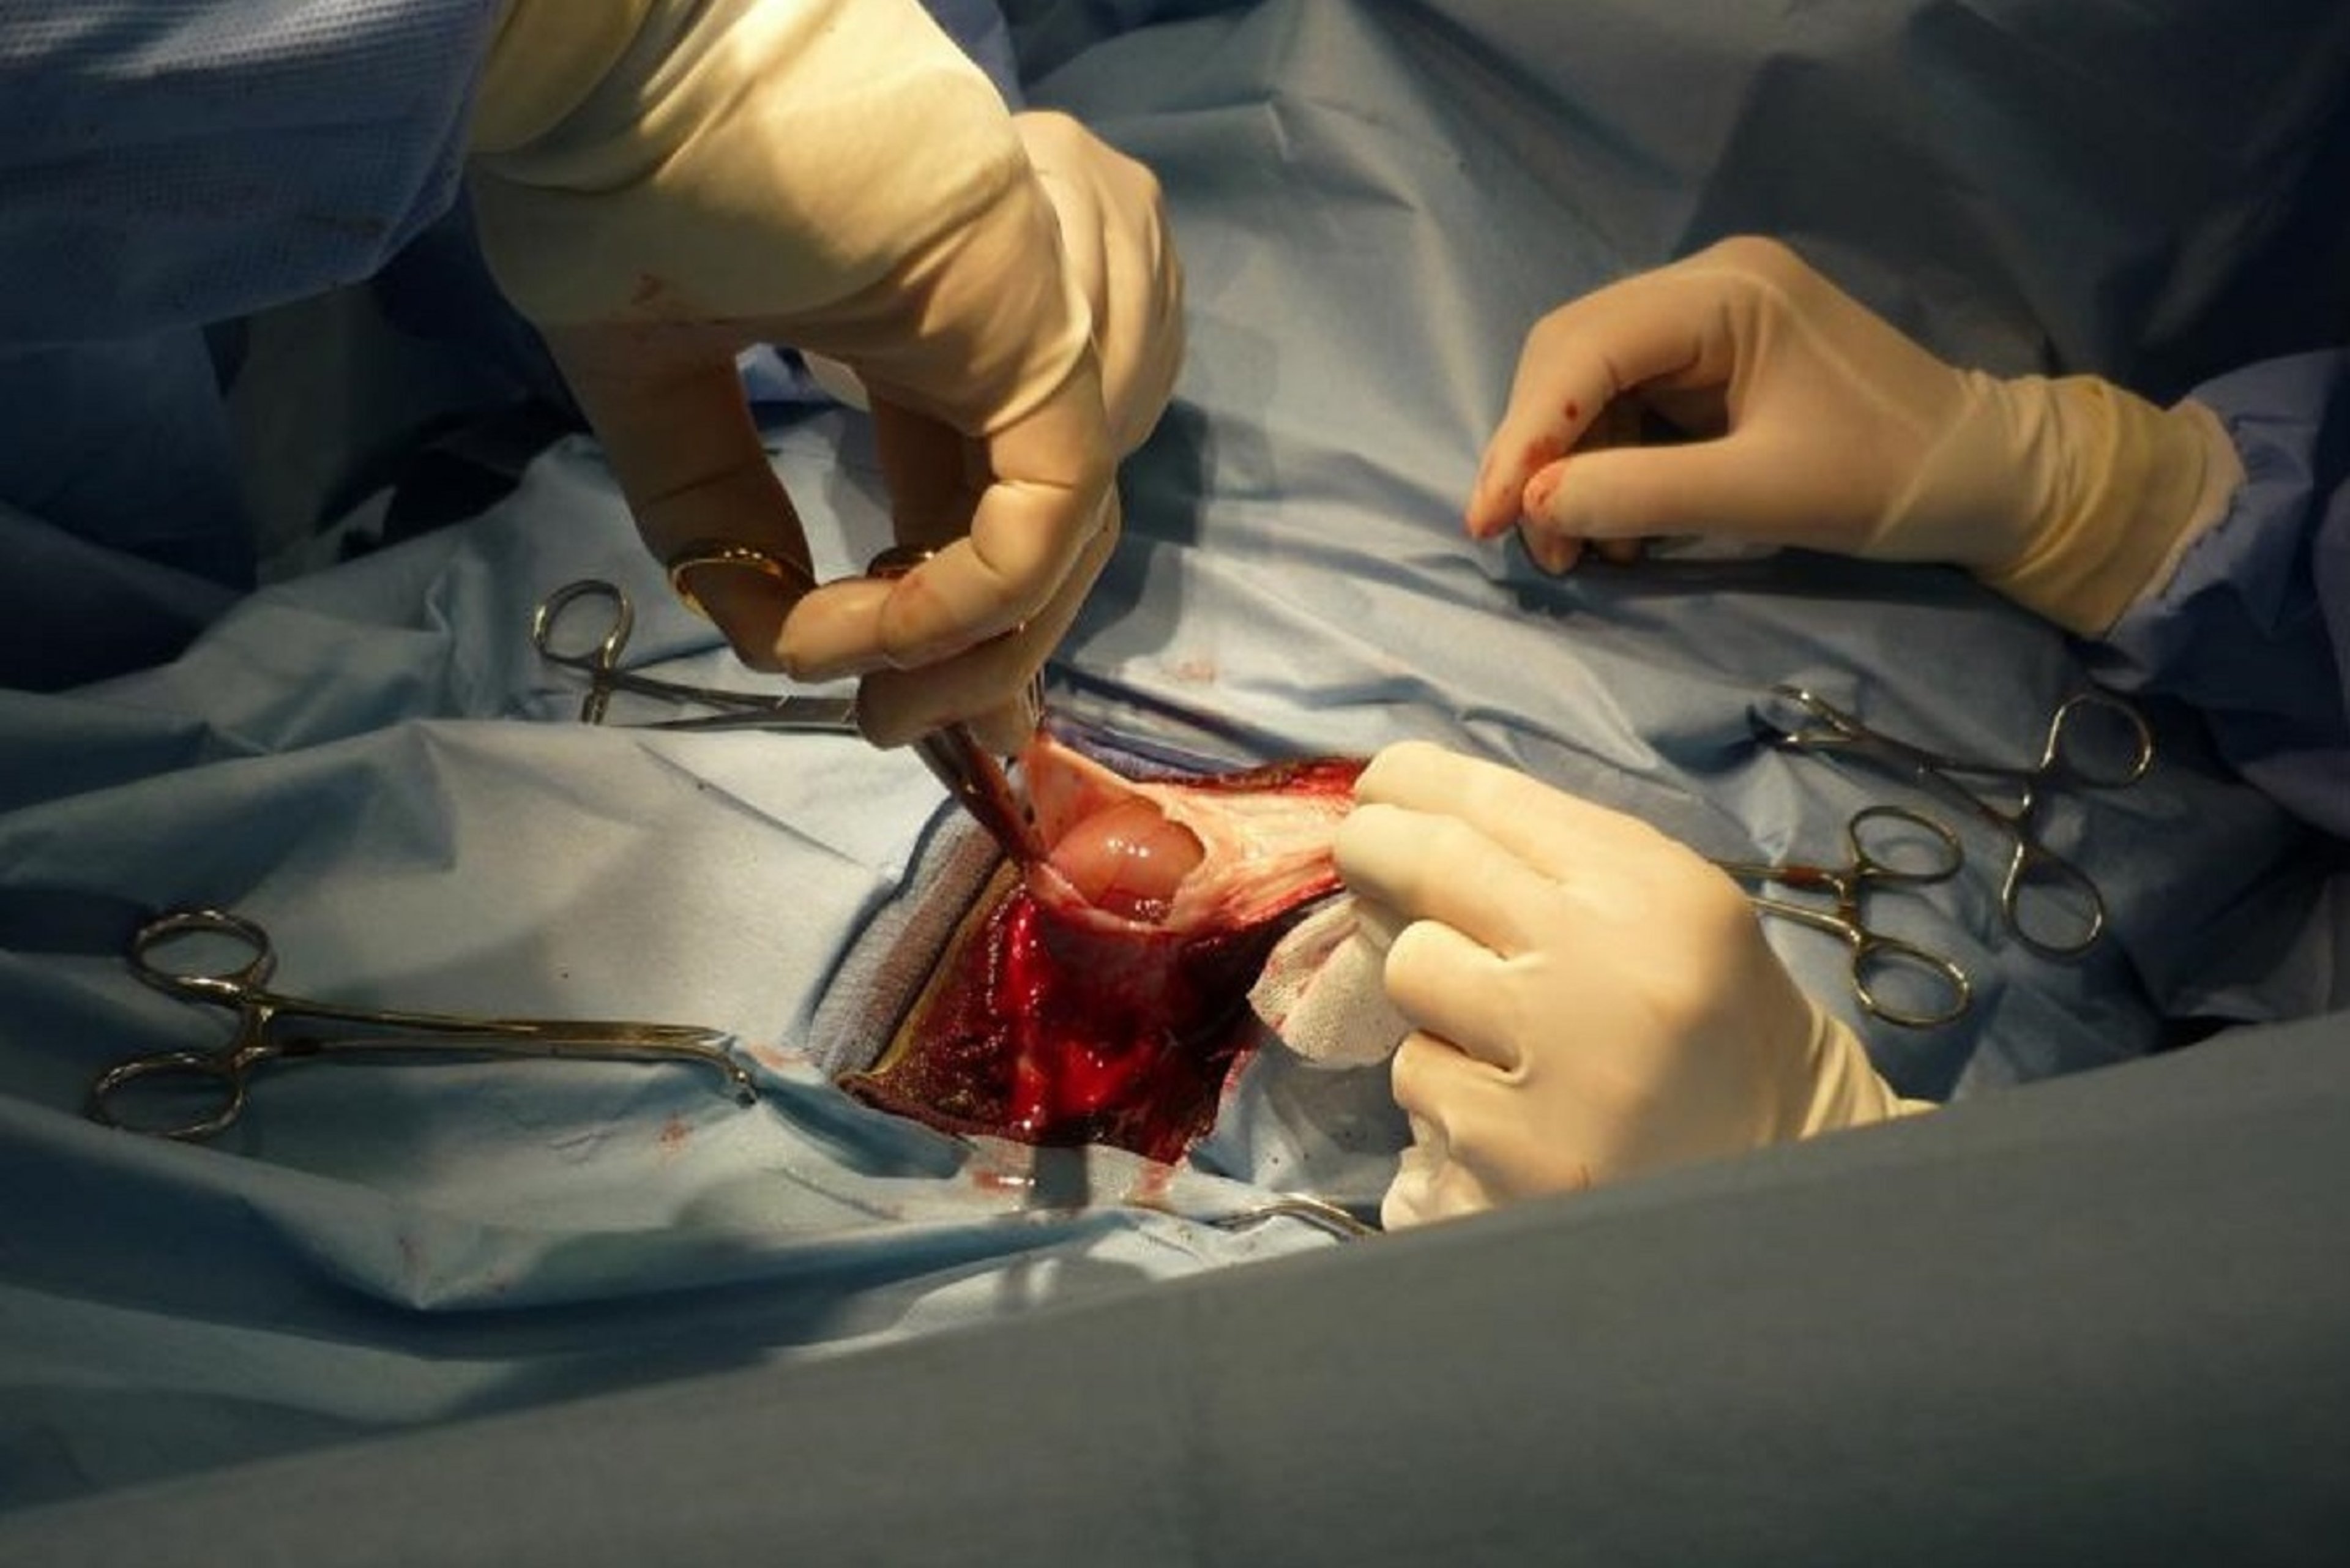 Congenital umbilical hernia, foal, opening hernia sac